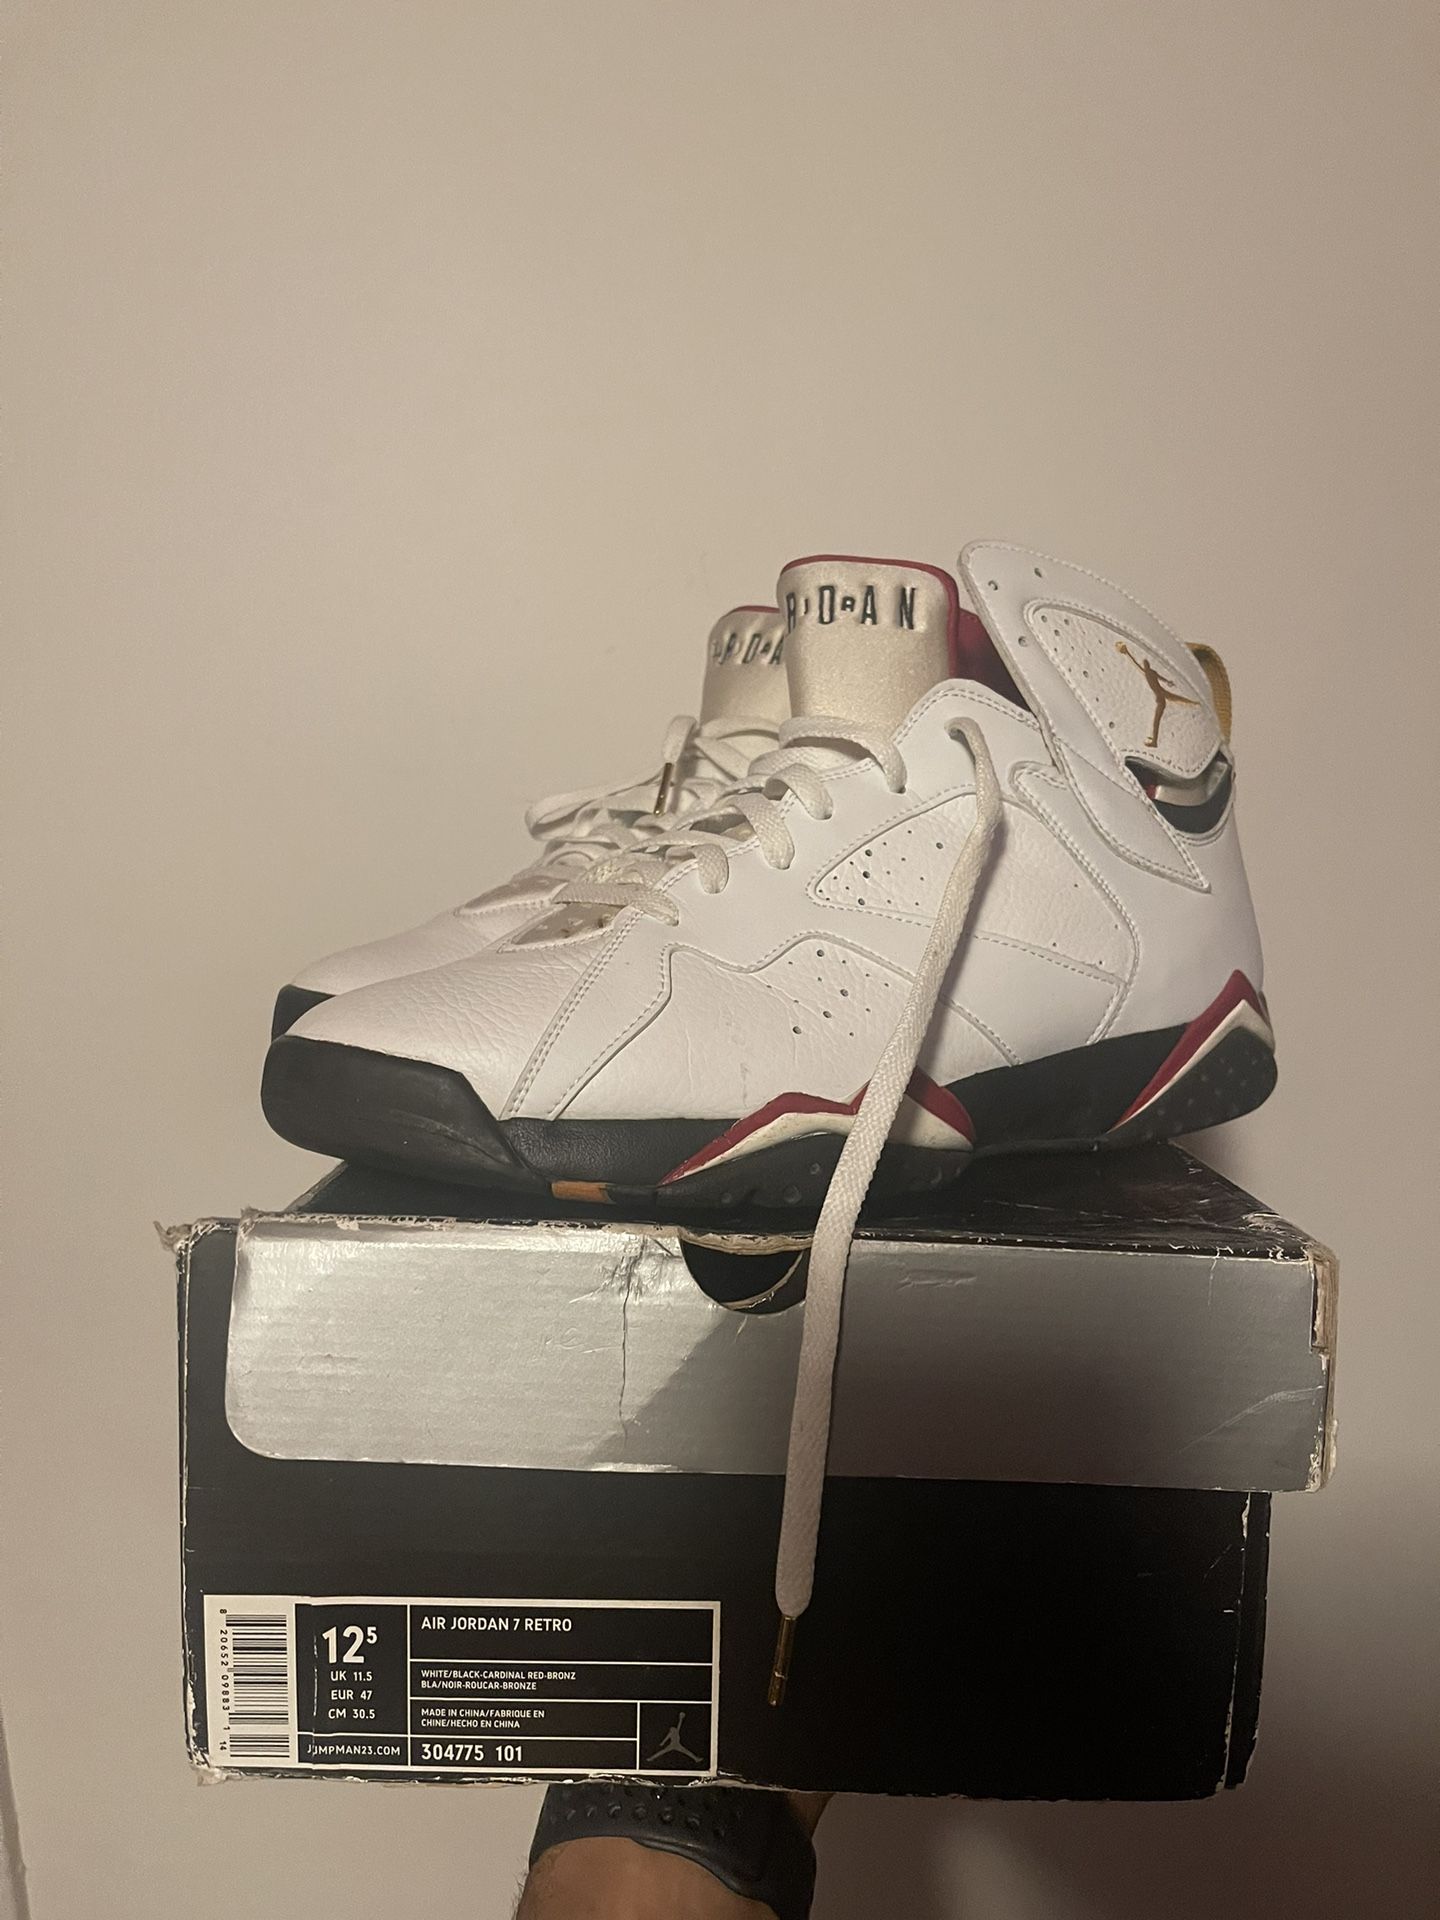 Air Jordan 7 Retro (Cardinal) Size 12.5 Men